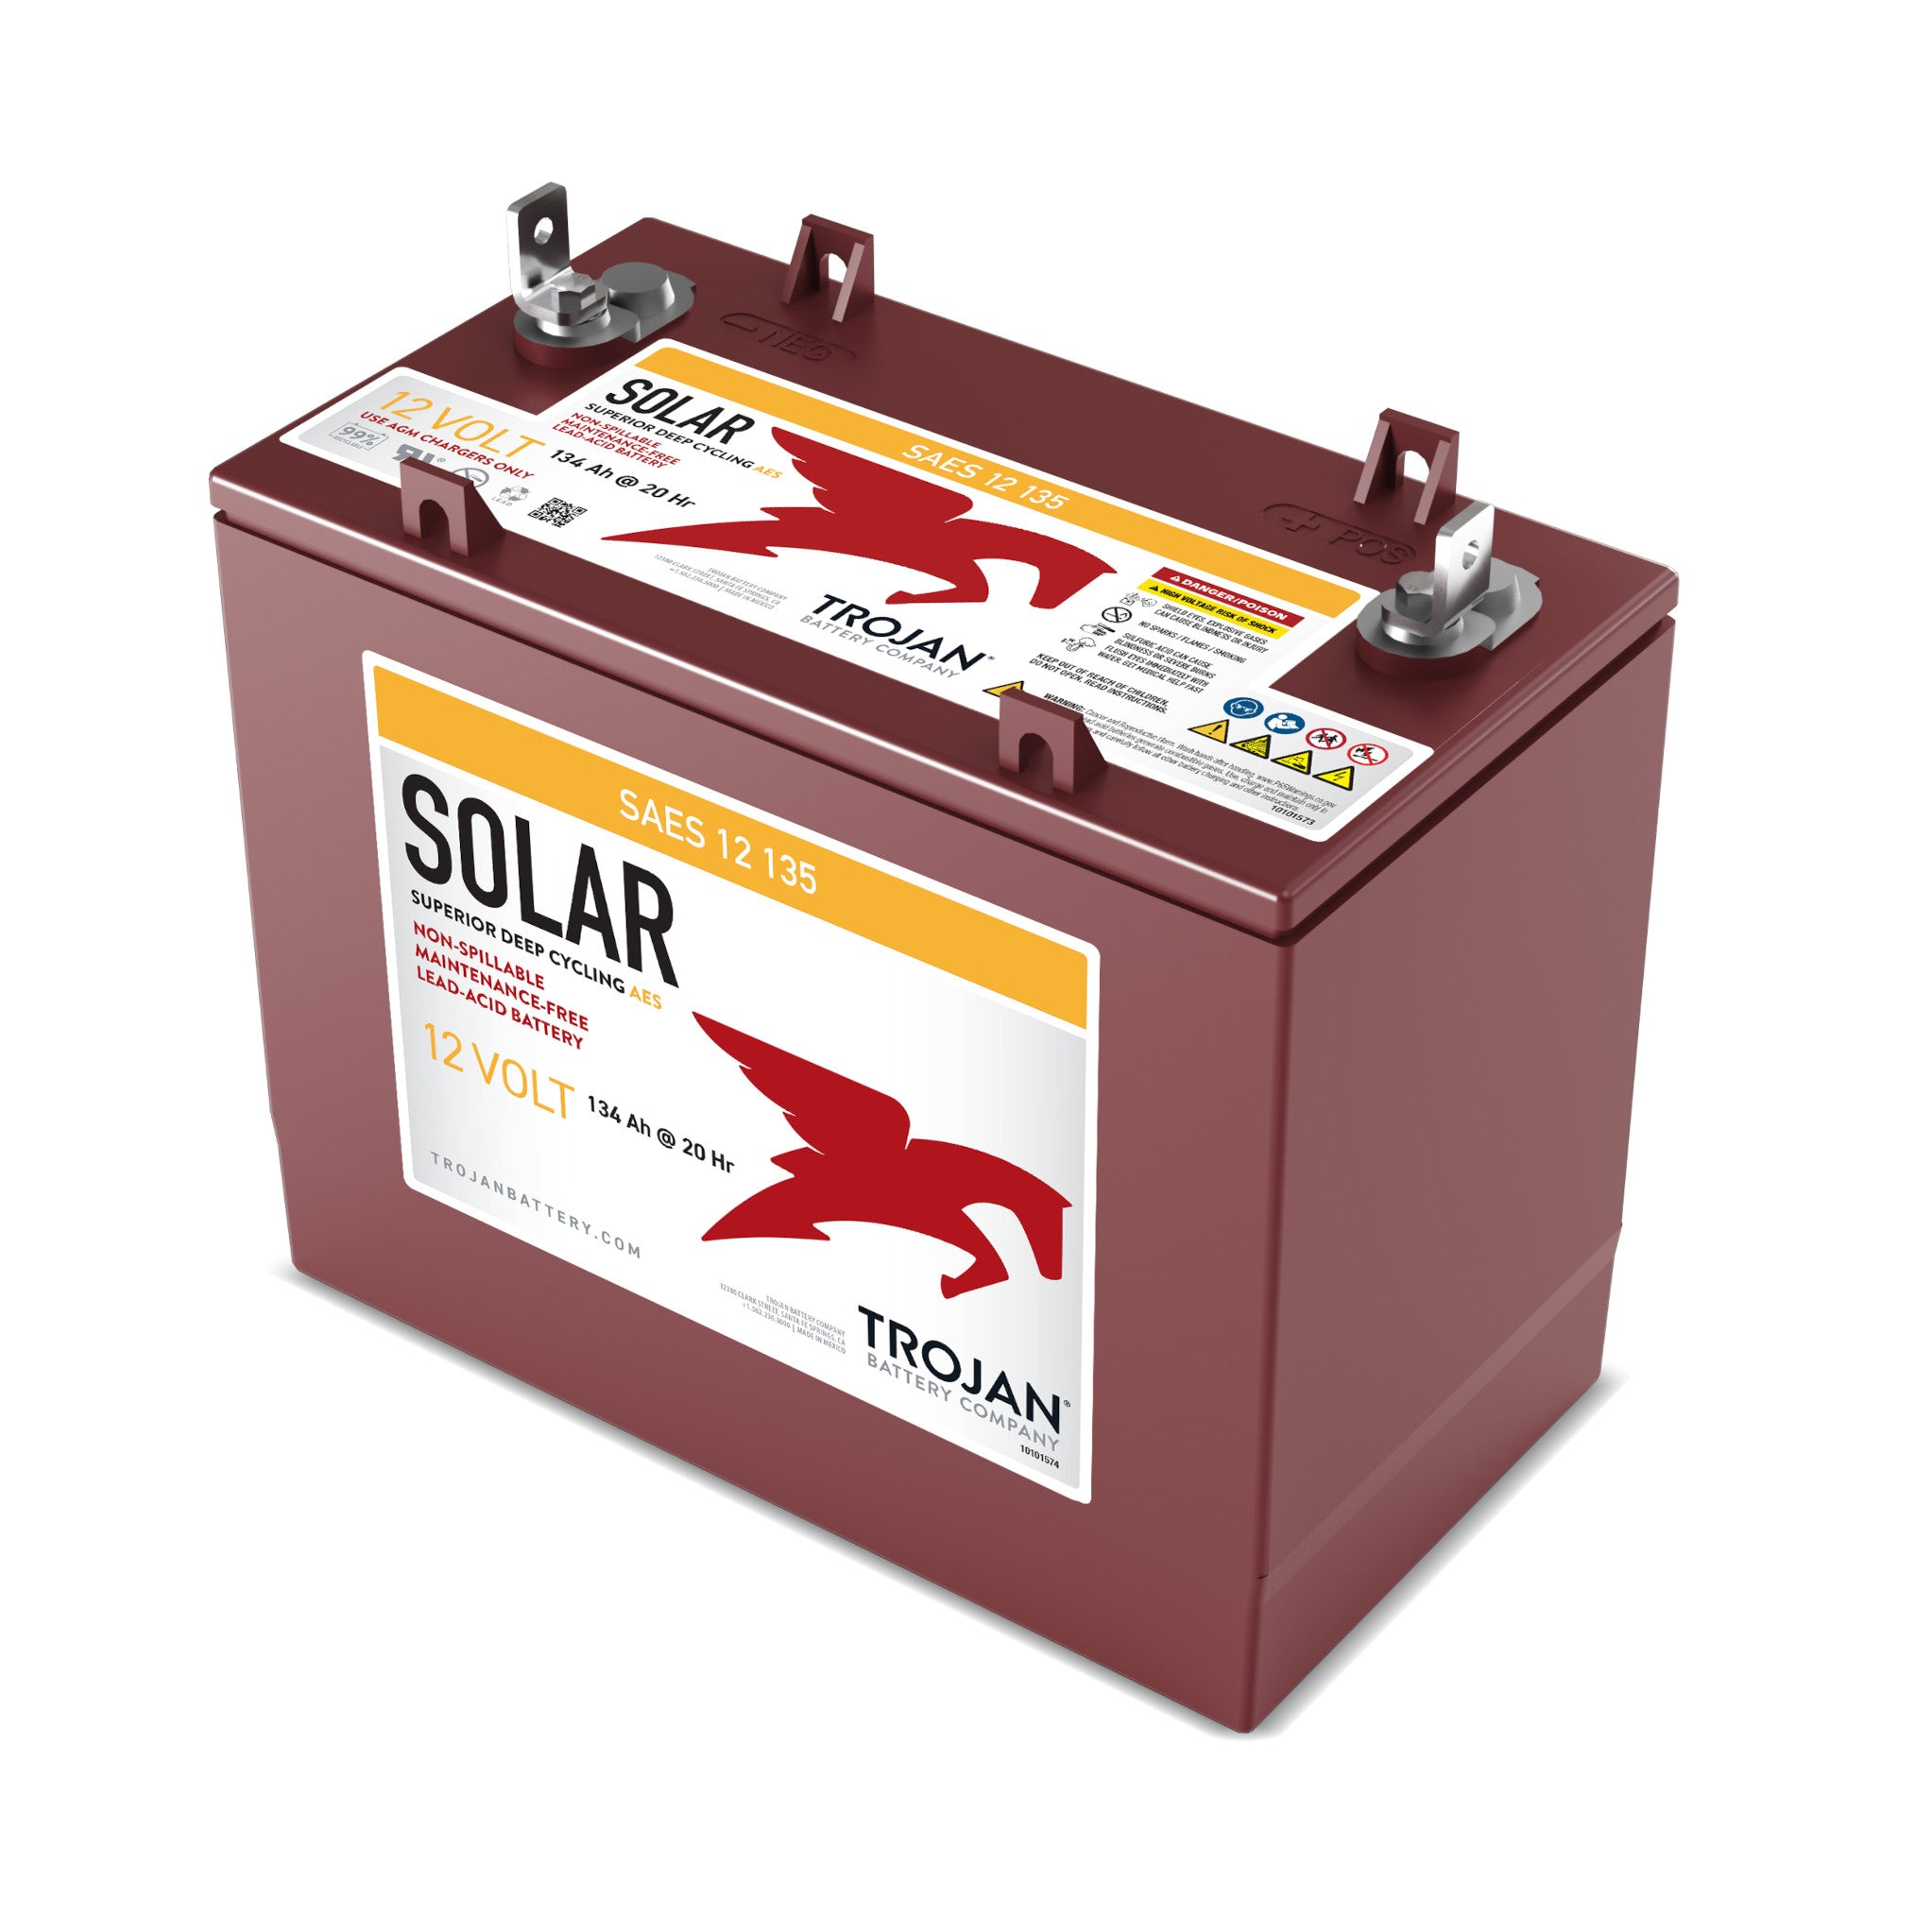 Trojan SAES 12 135 12V Solar Deep Cycle AGM Battery